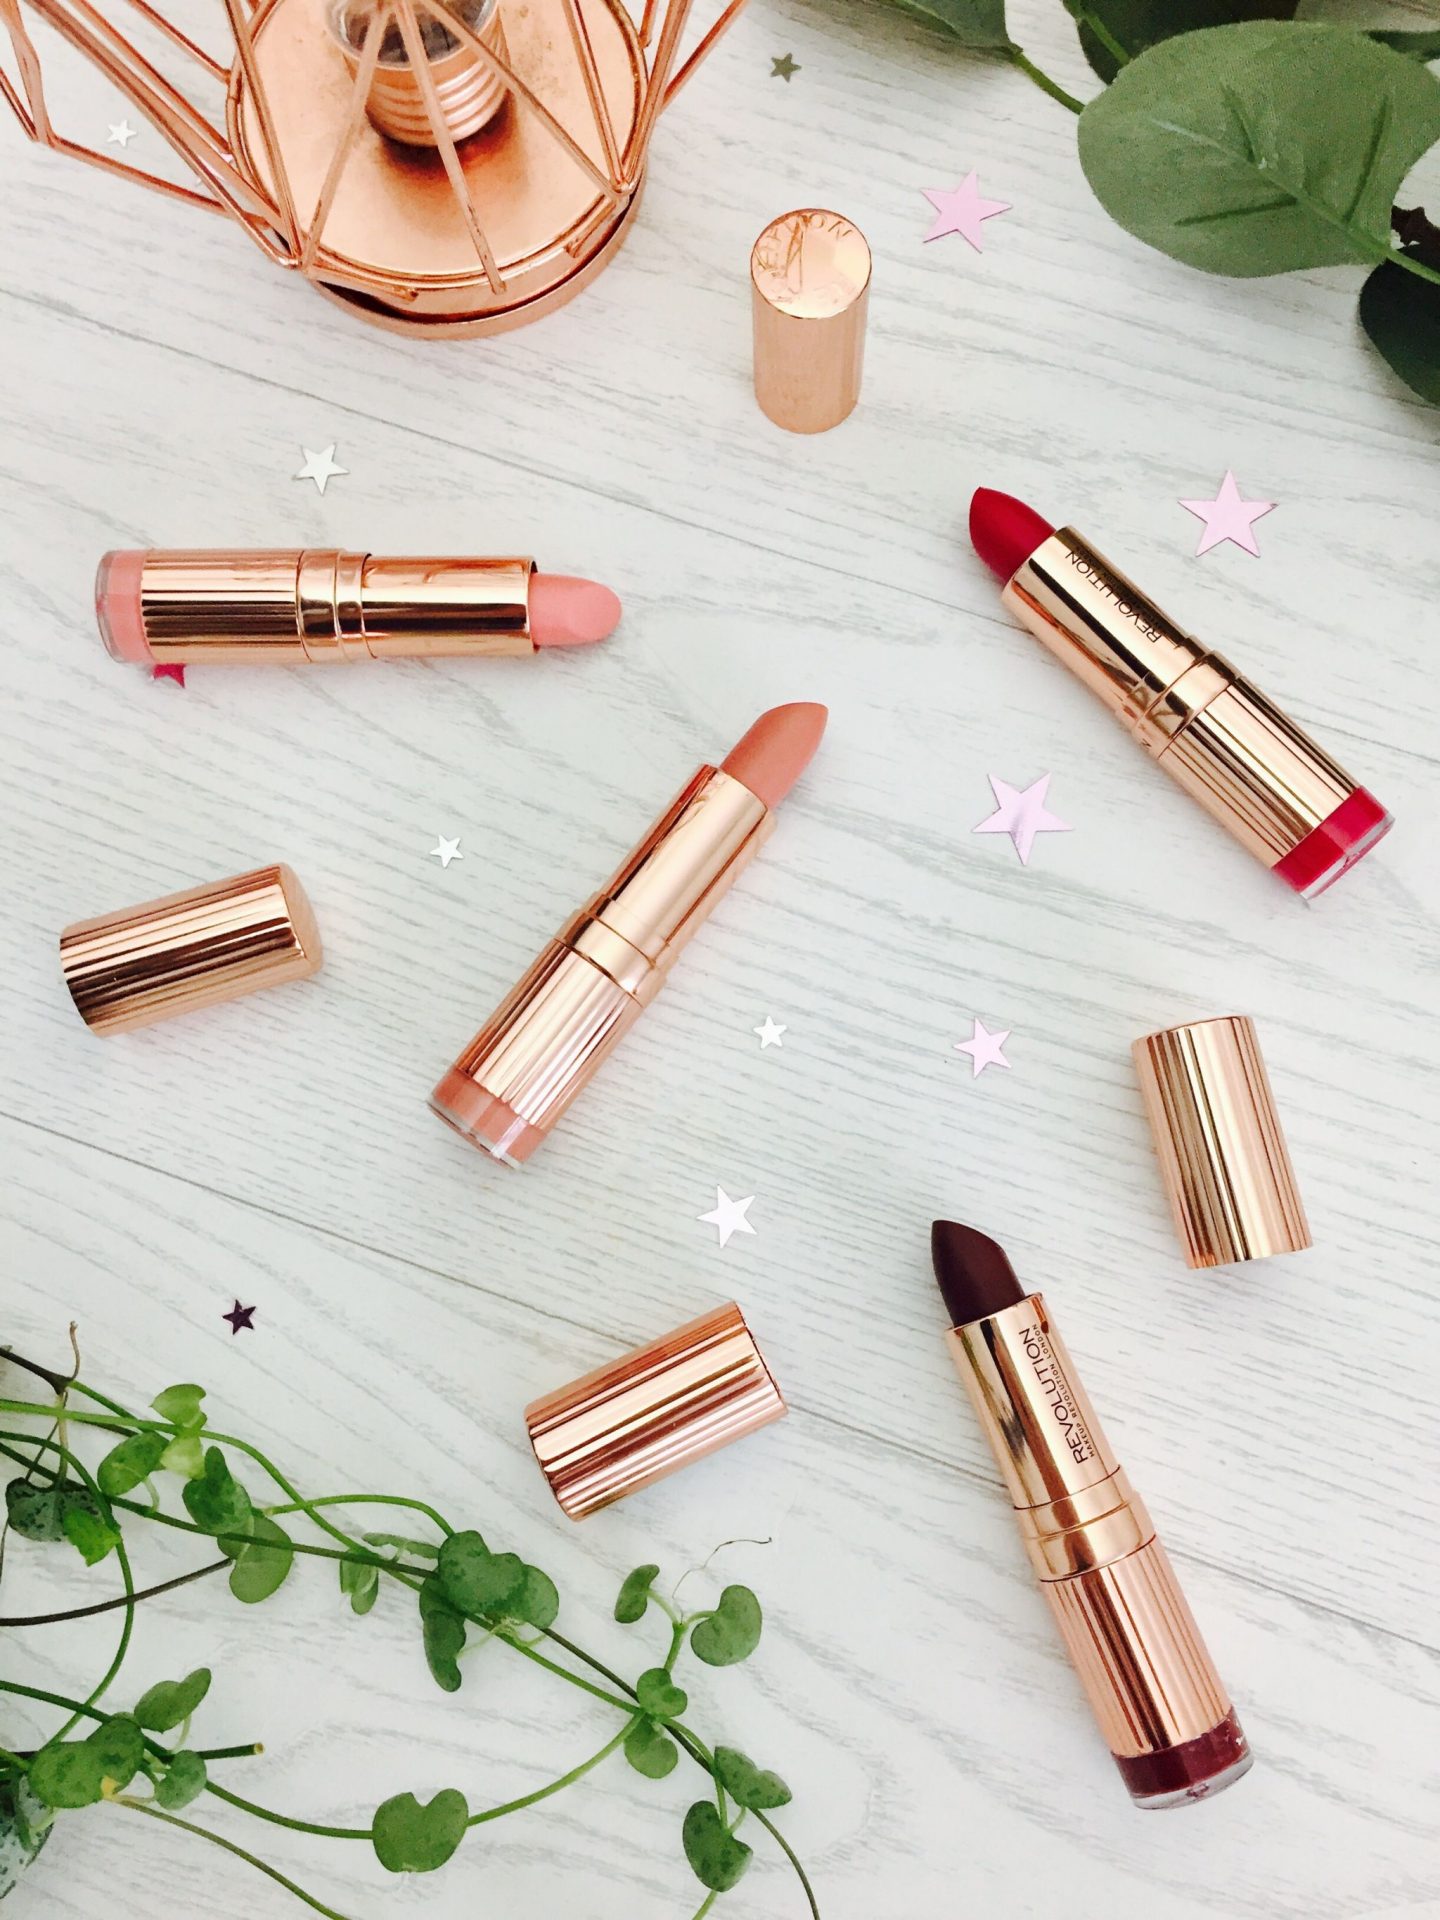 Makeup Revolution New Release Renaissance Lipstick shades Blender Highness Higher Untouched Swatches